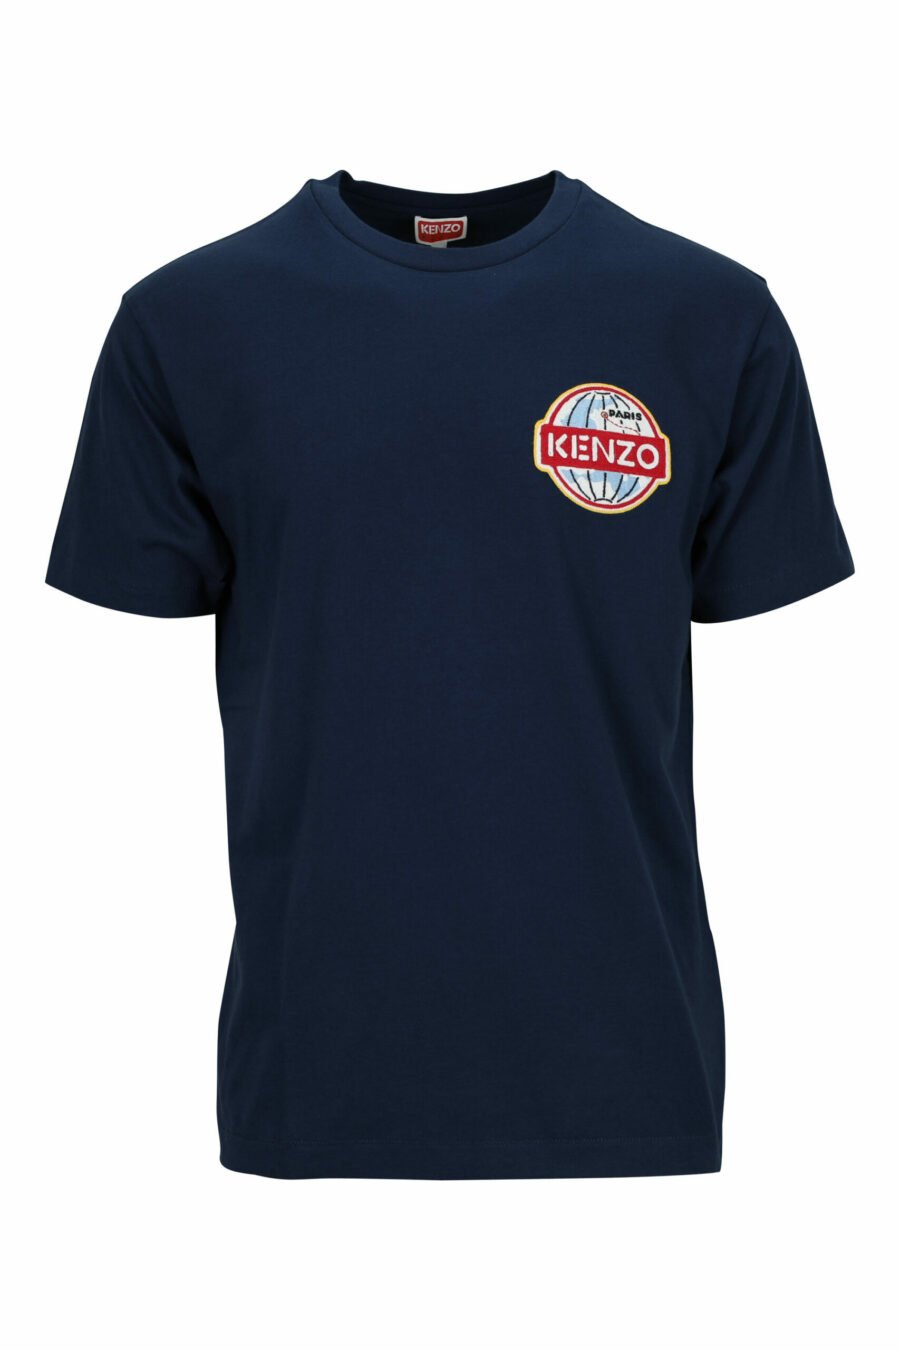 T-shirt azul com o mini-logotipo redondo "Kenzo" - 3612230544475 à escala